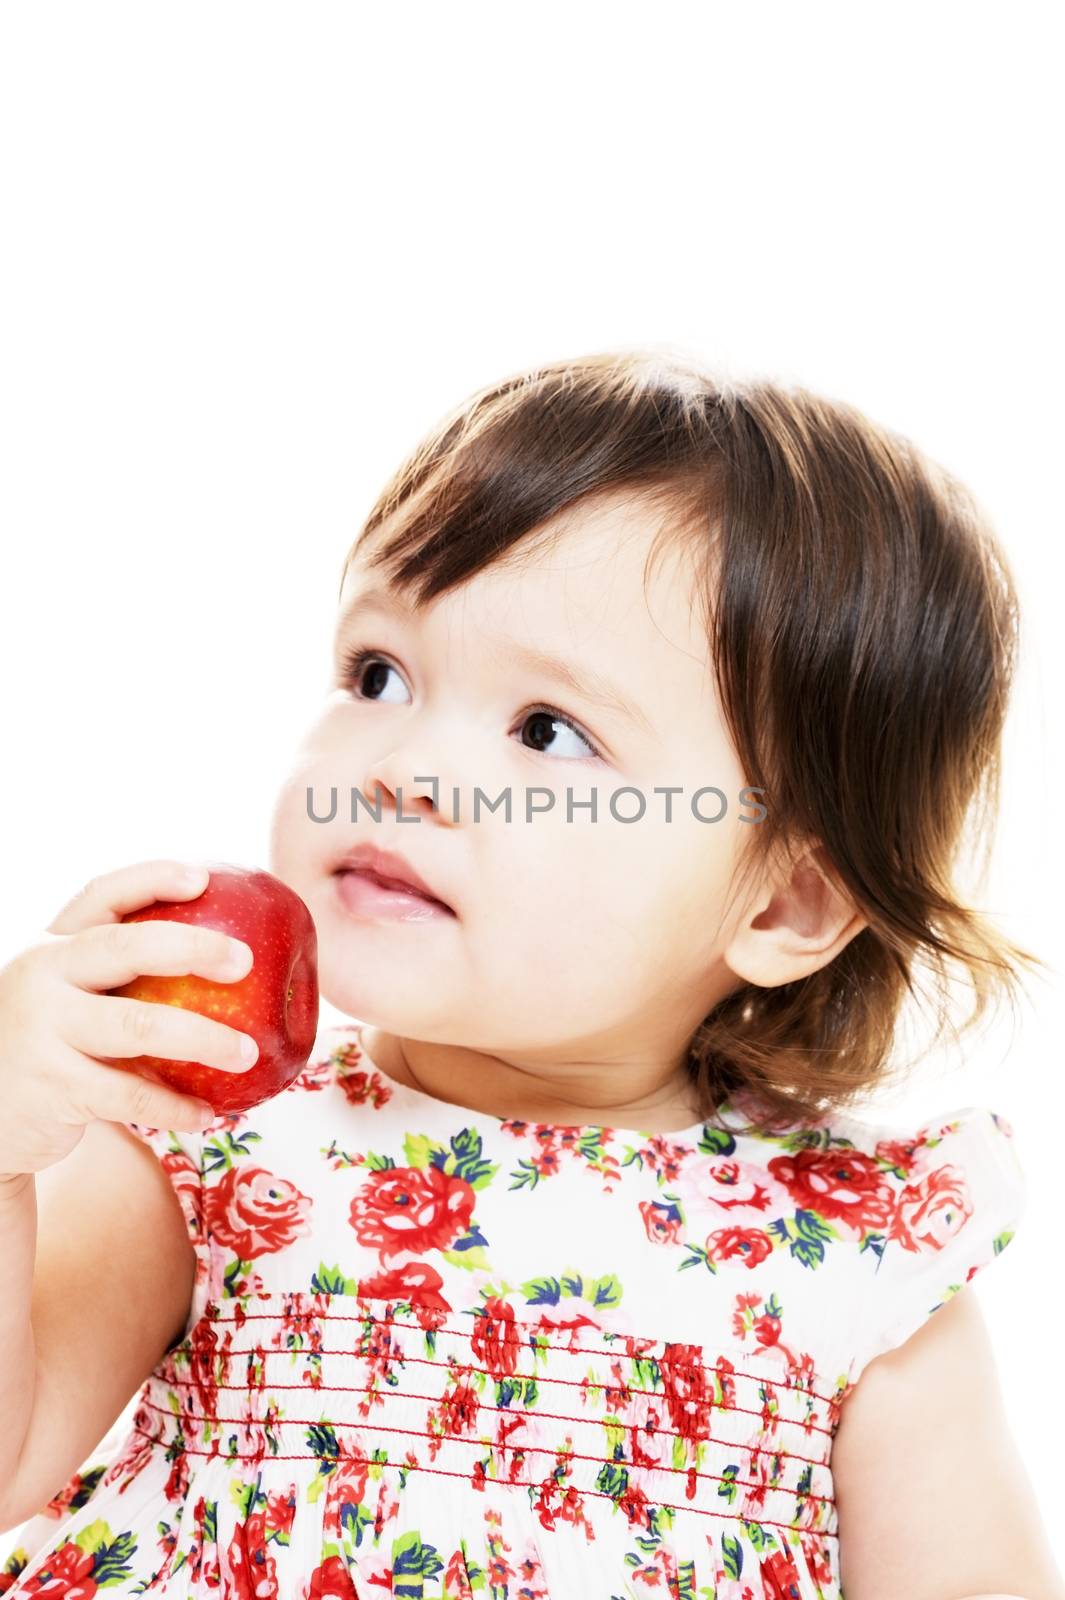 Little girl eating apple closeup portrait